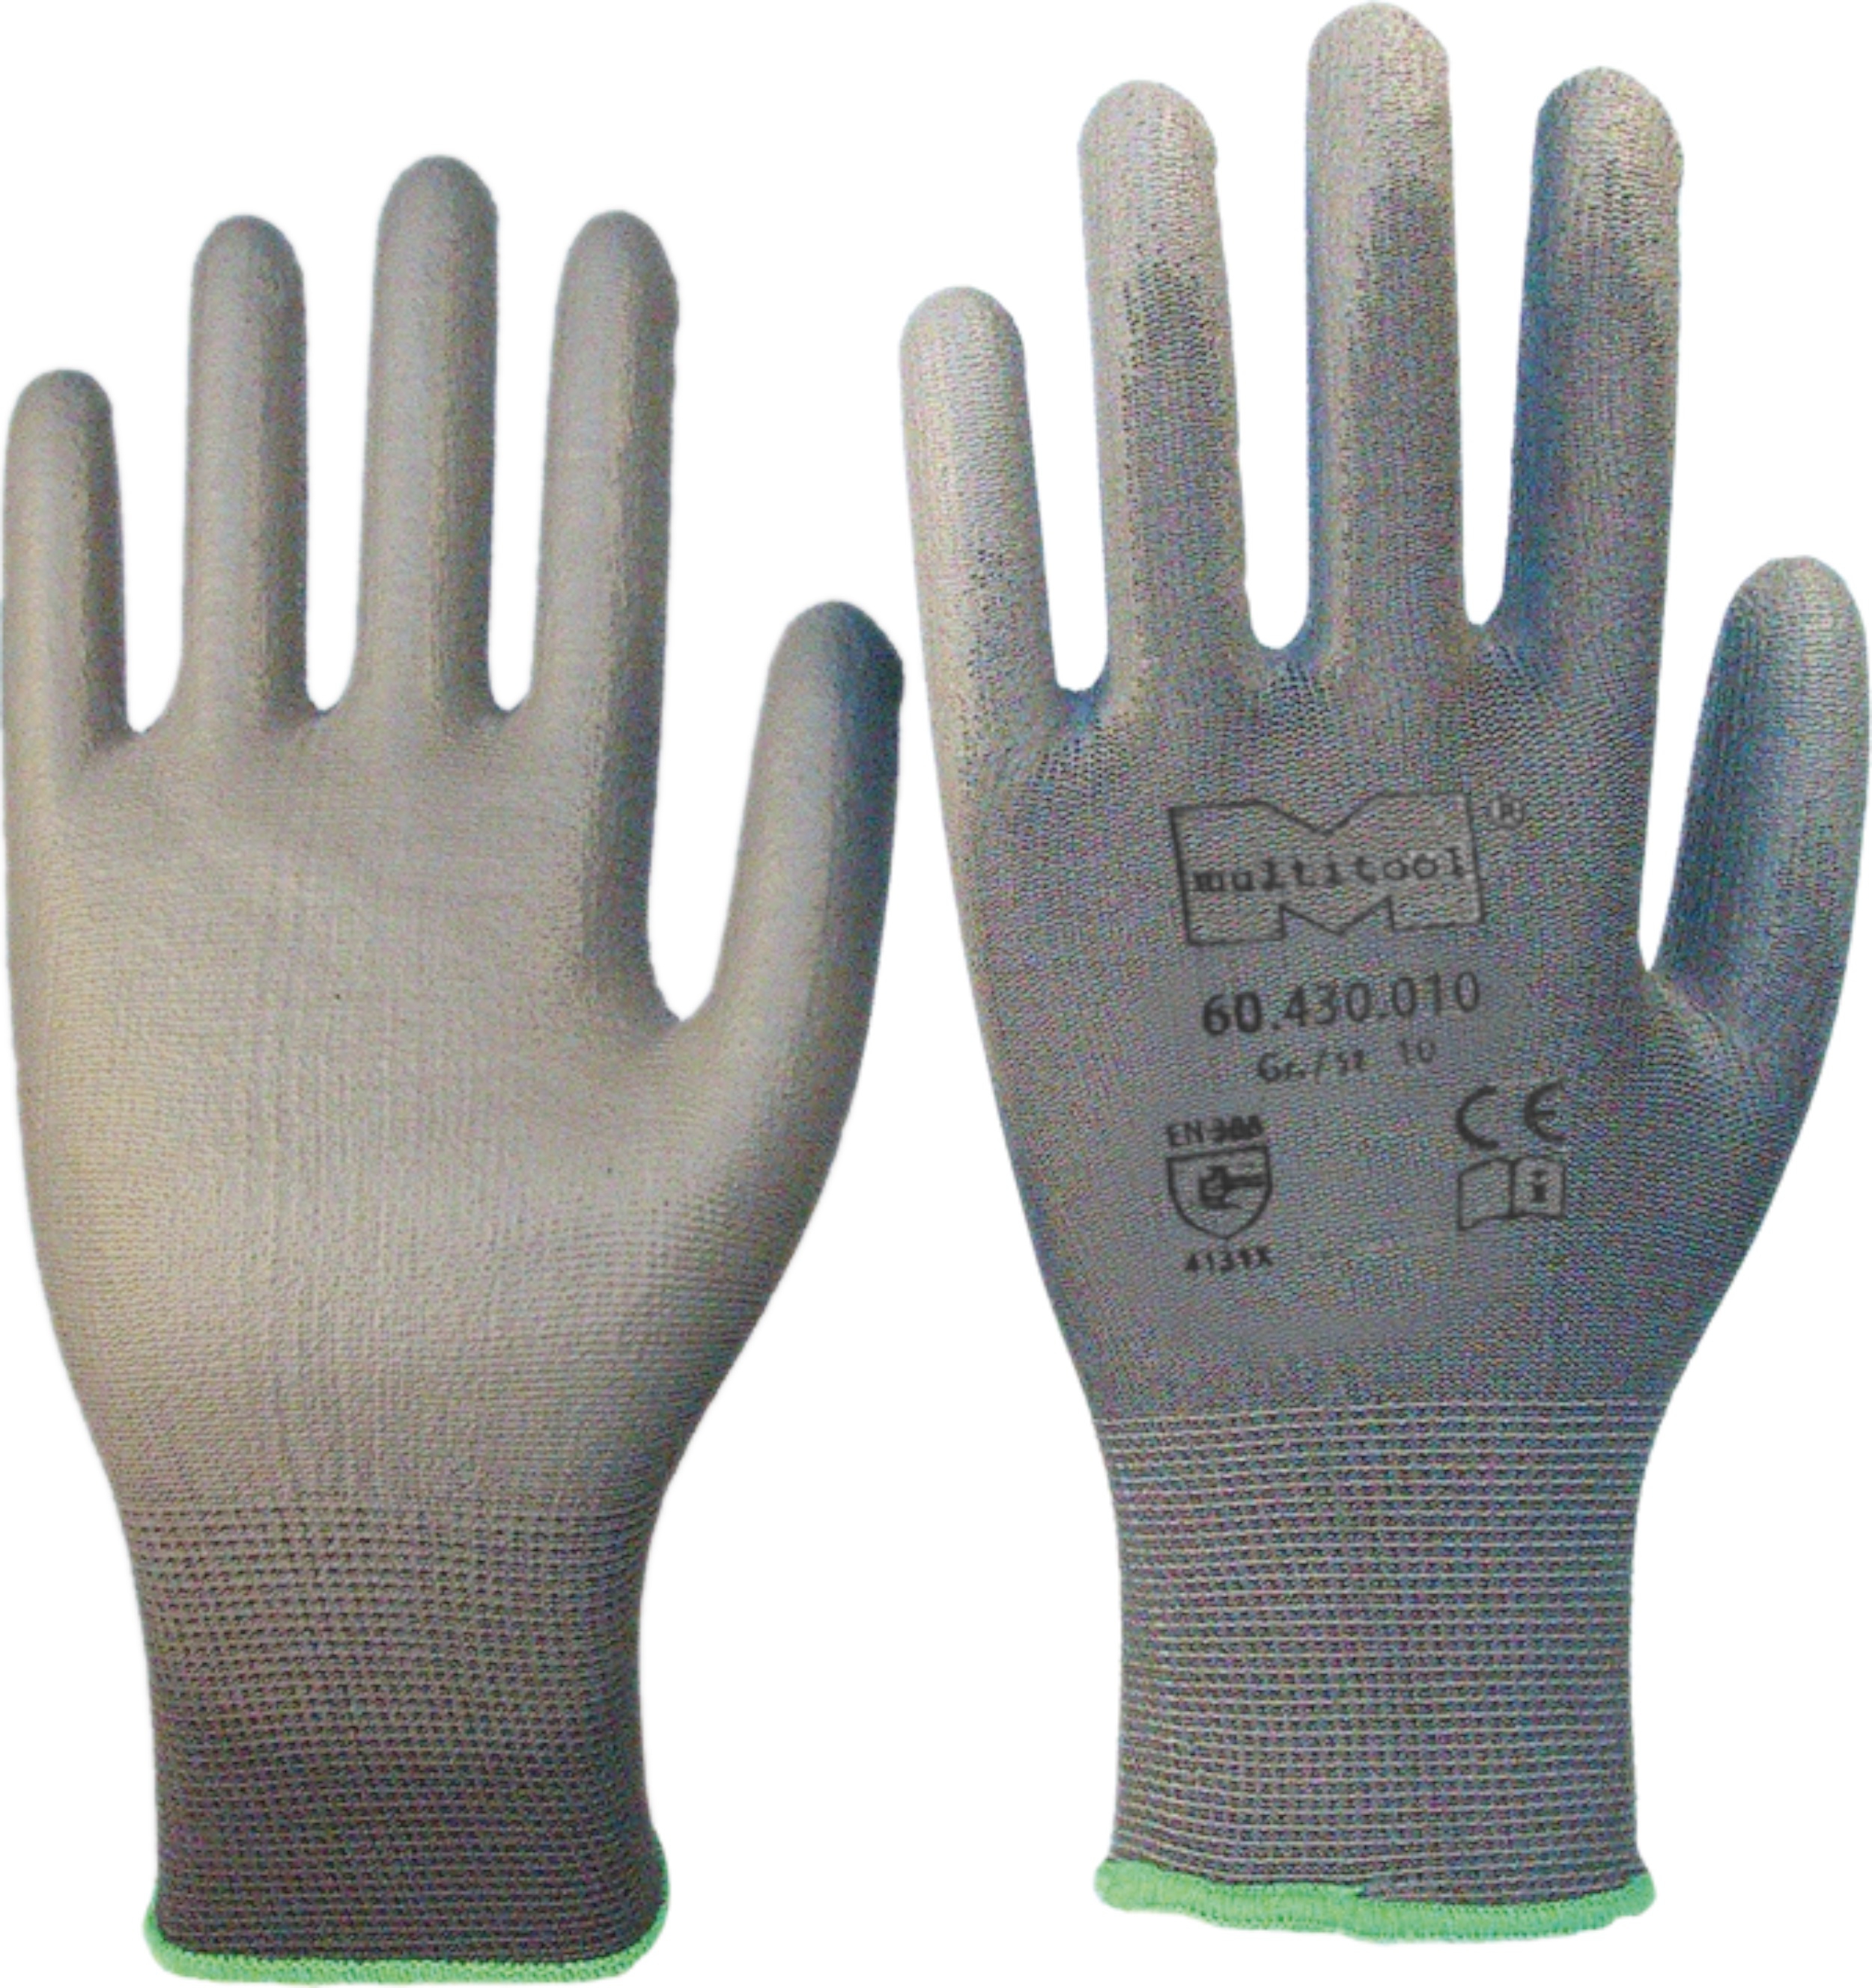 Stretch Handschuhe mit PU Beschichtung